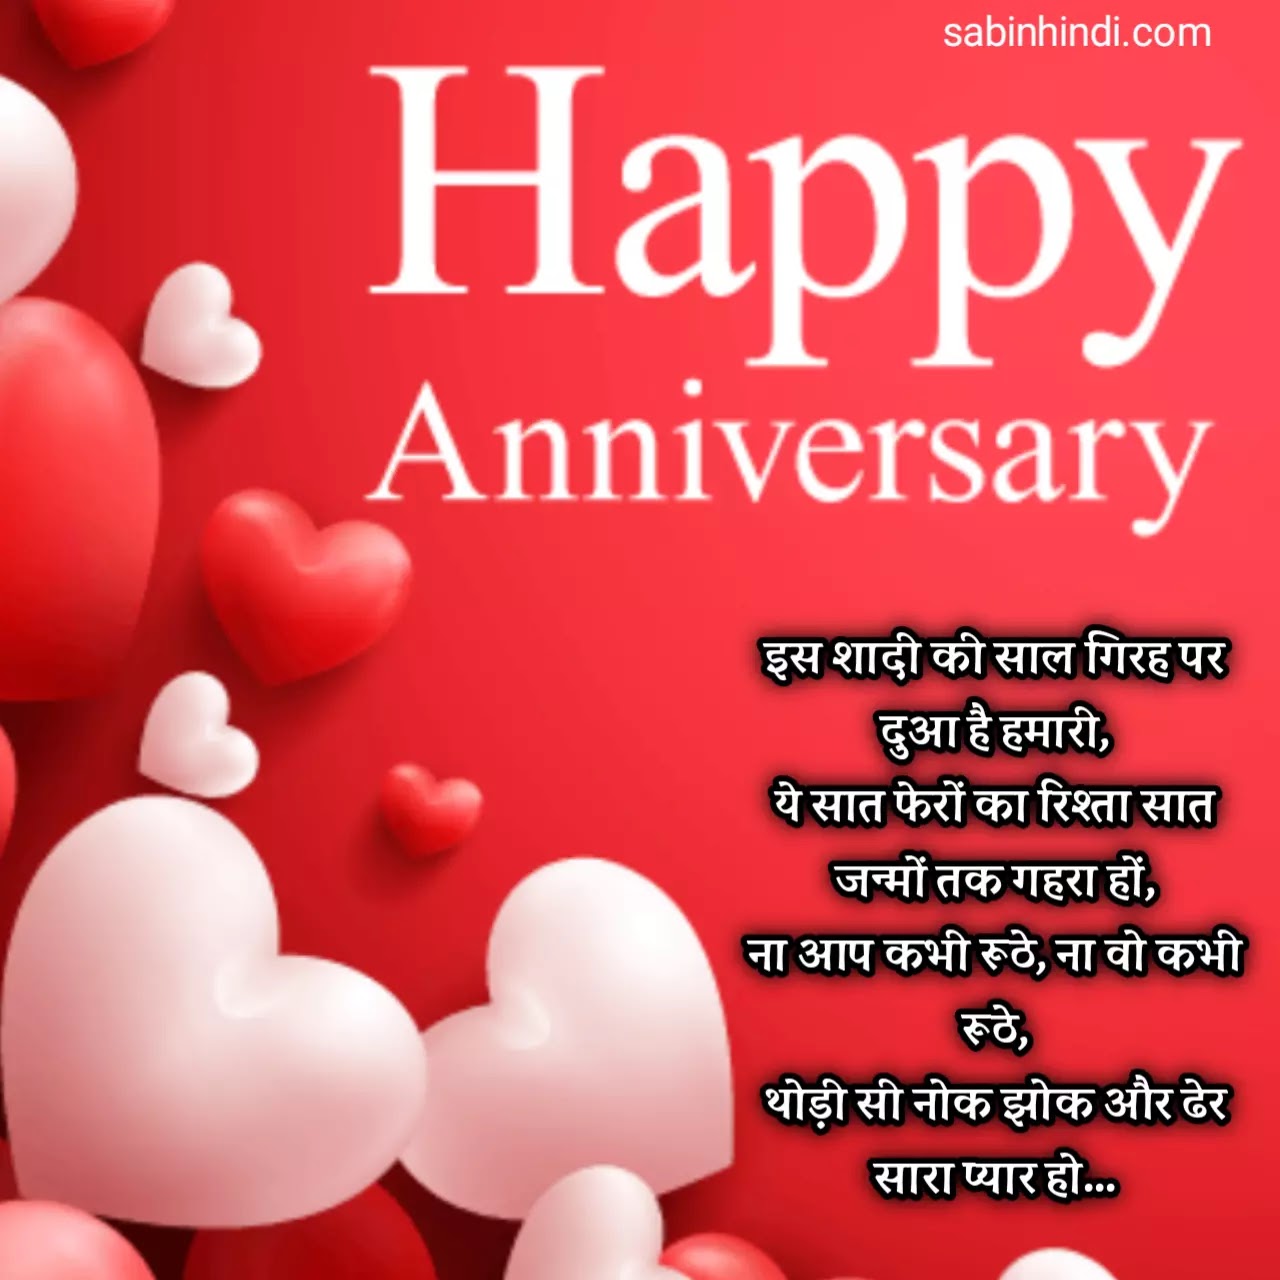 Happy marriage anniversary best wishes Images • Priya singh ...